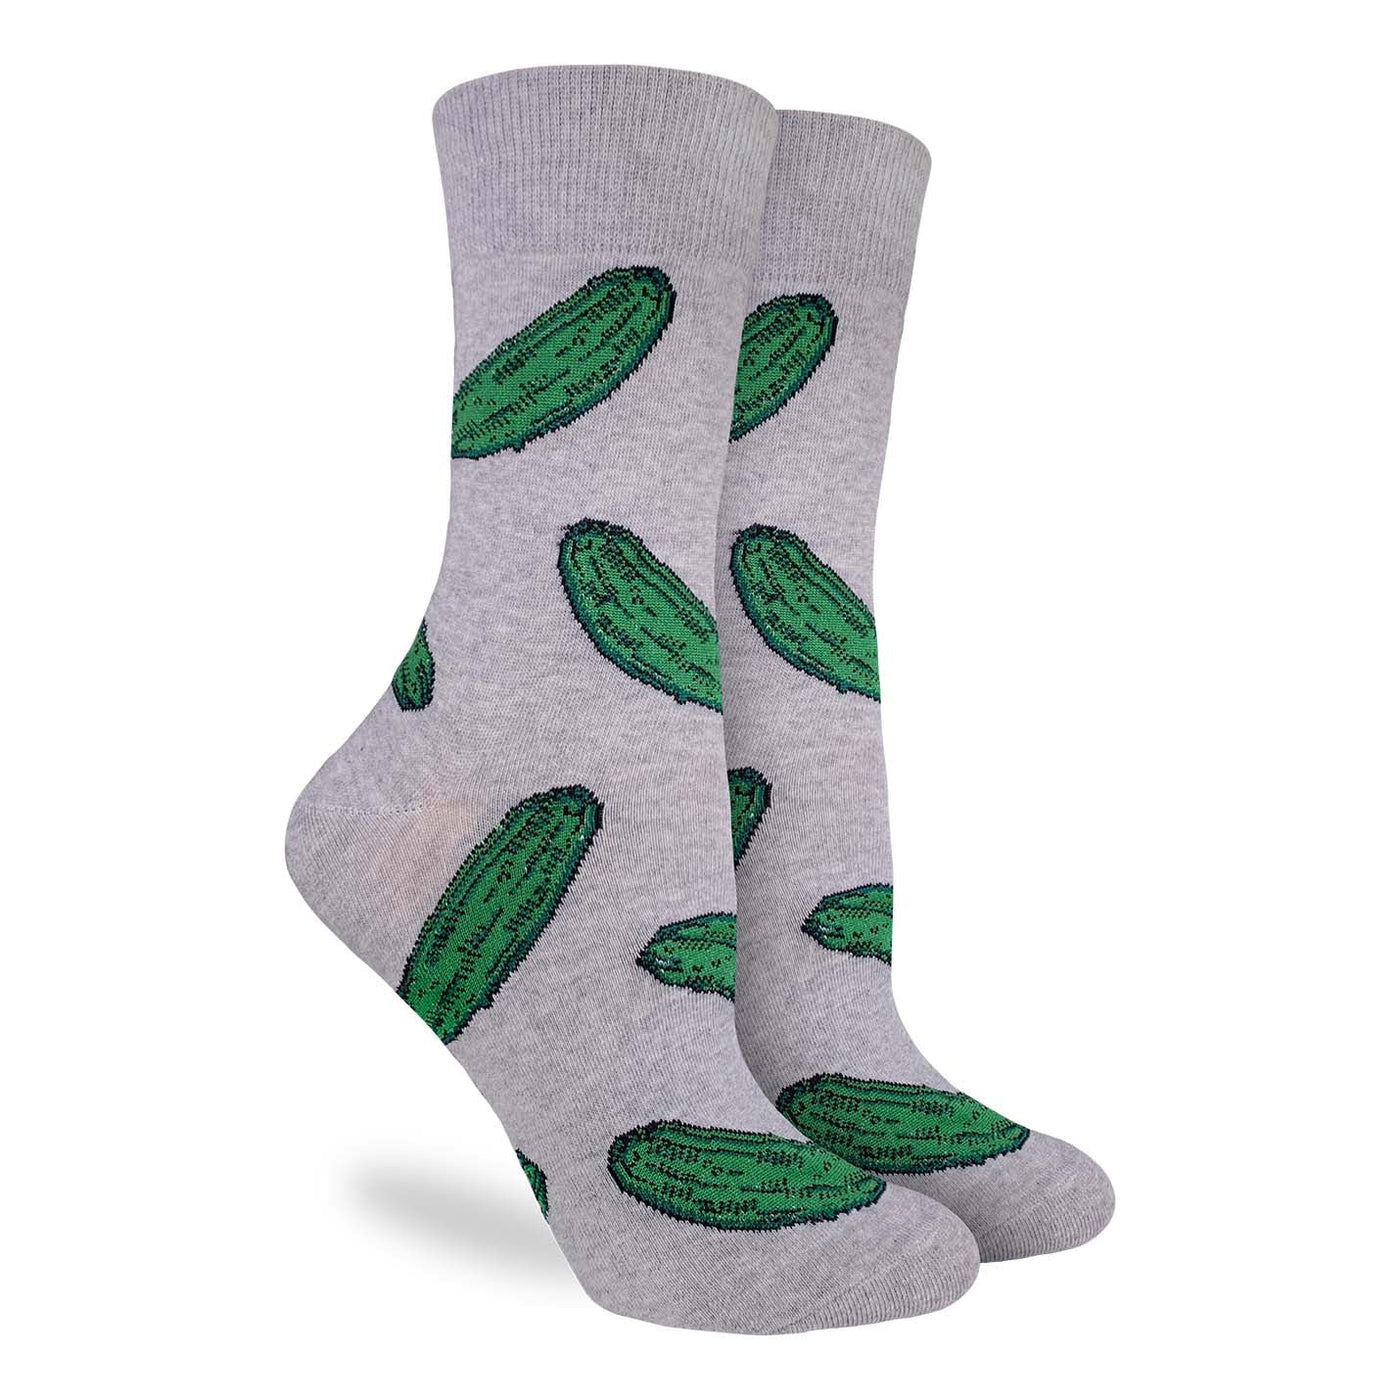 "Pickles" Crew Socks by Good Luck Sock - SALE